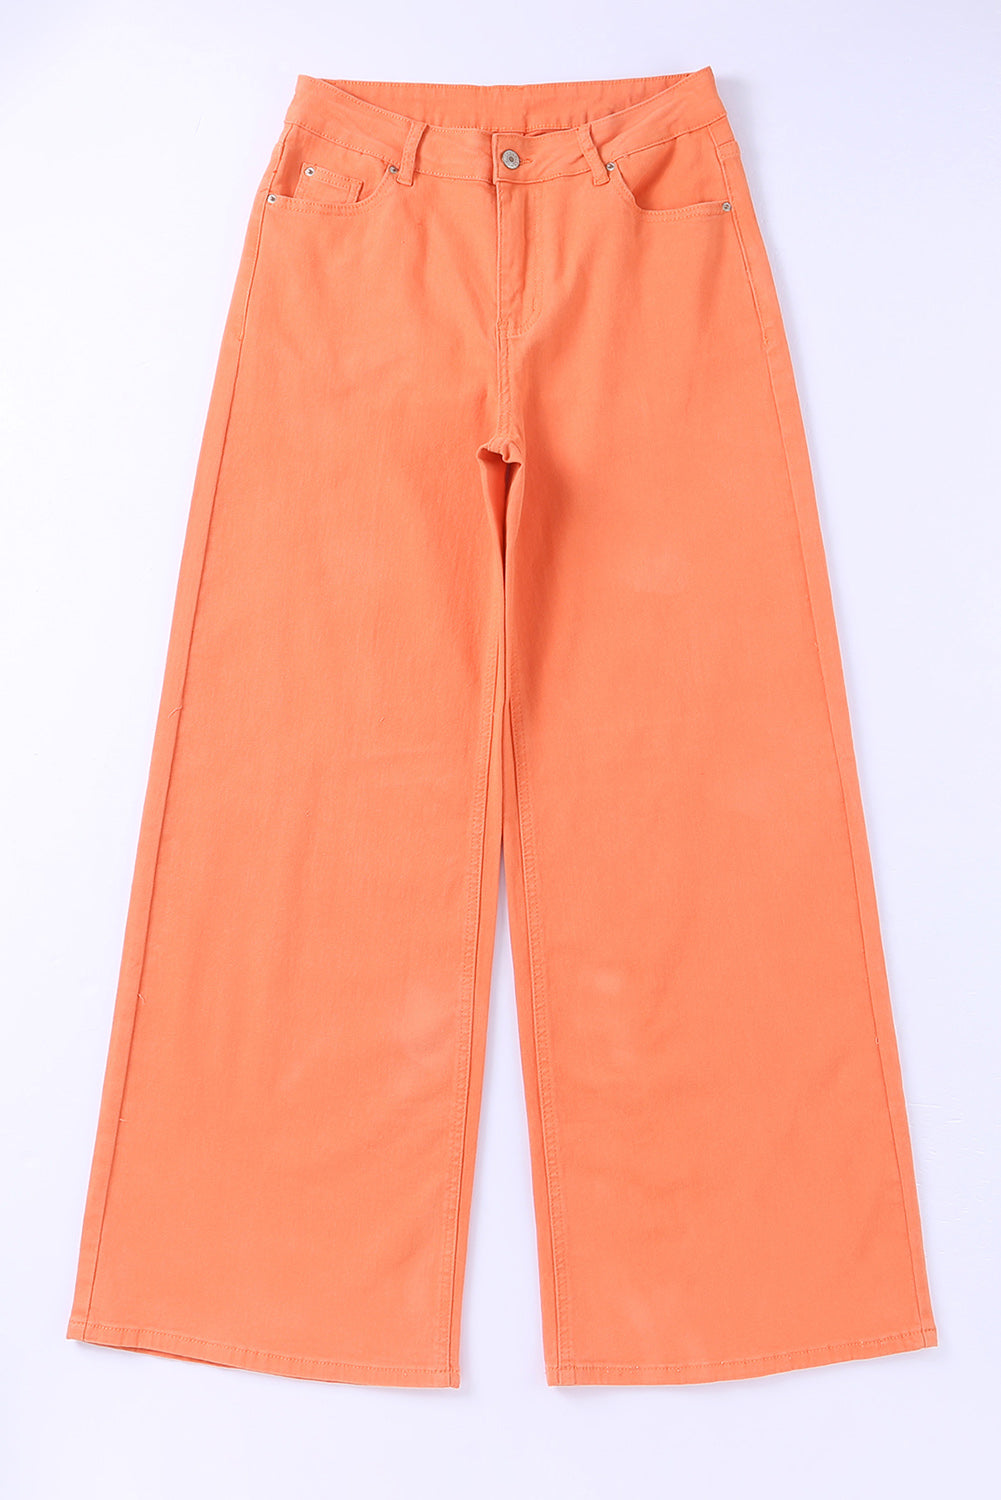 Orange Acid Wash Casual High Waist Wide Leg Jeans